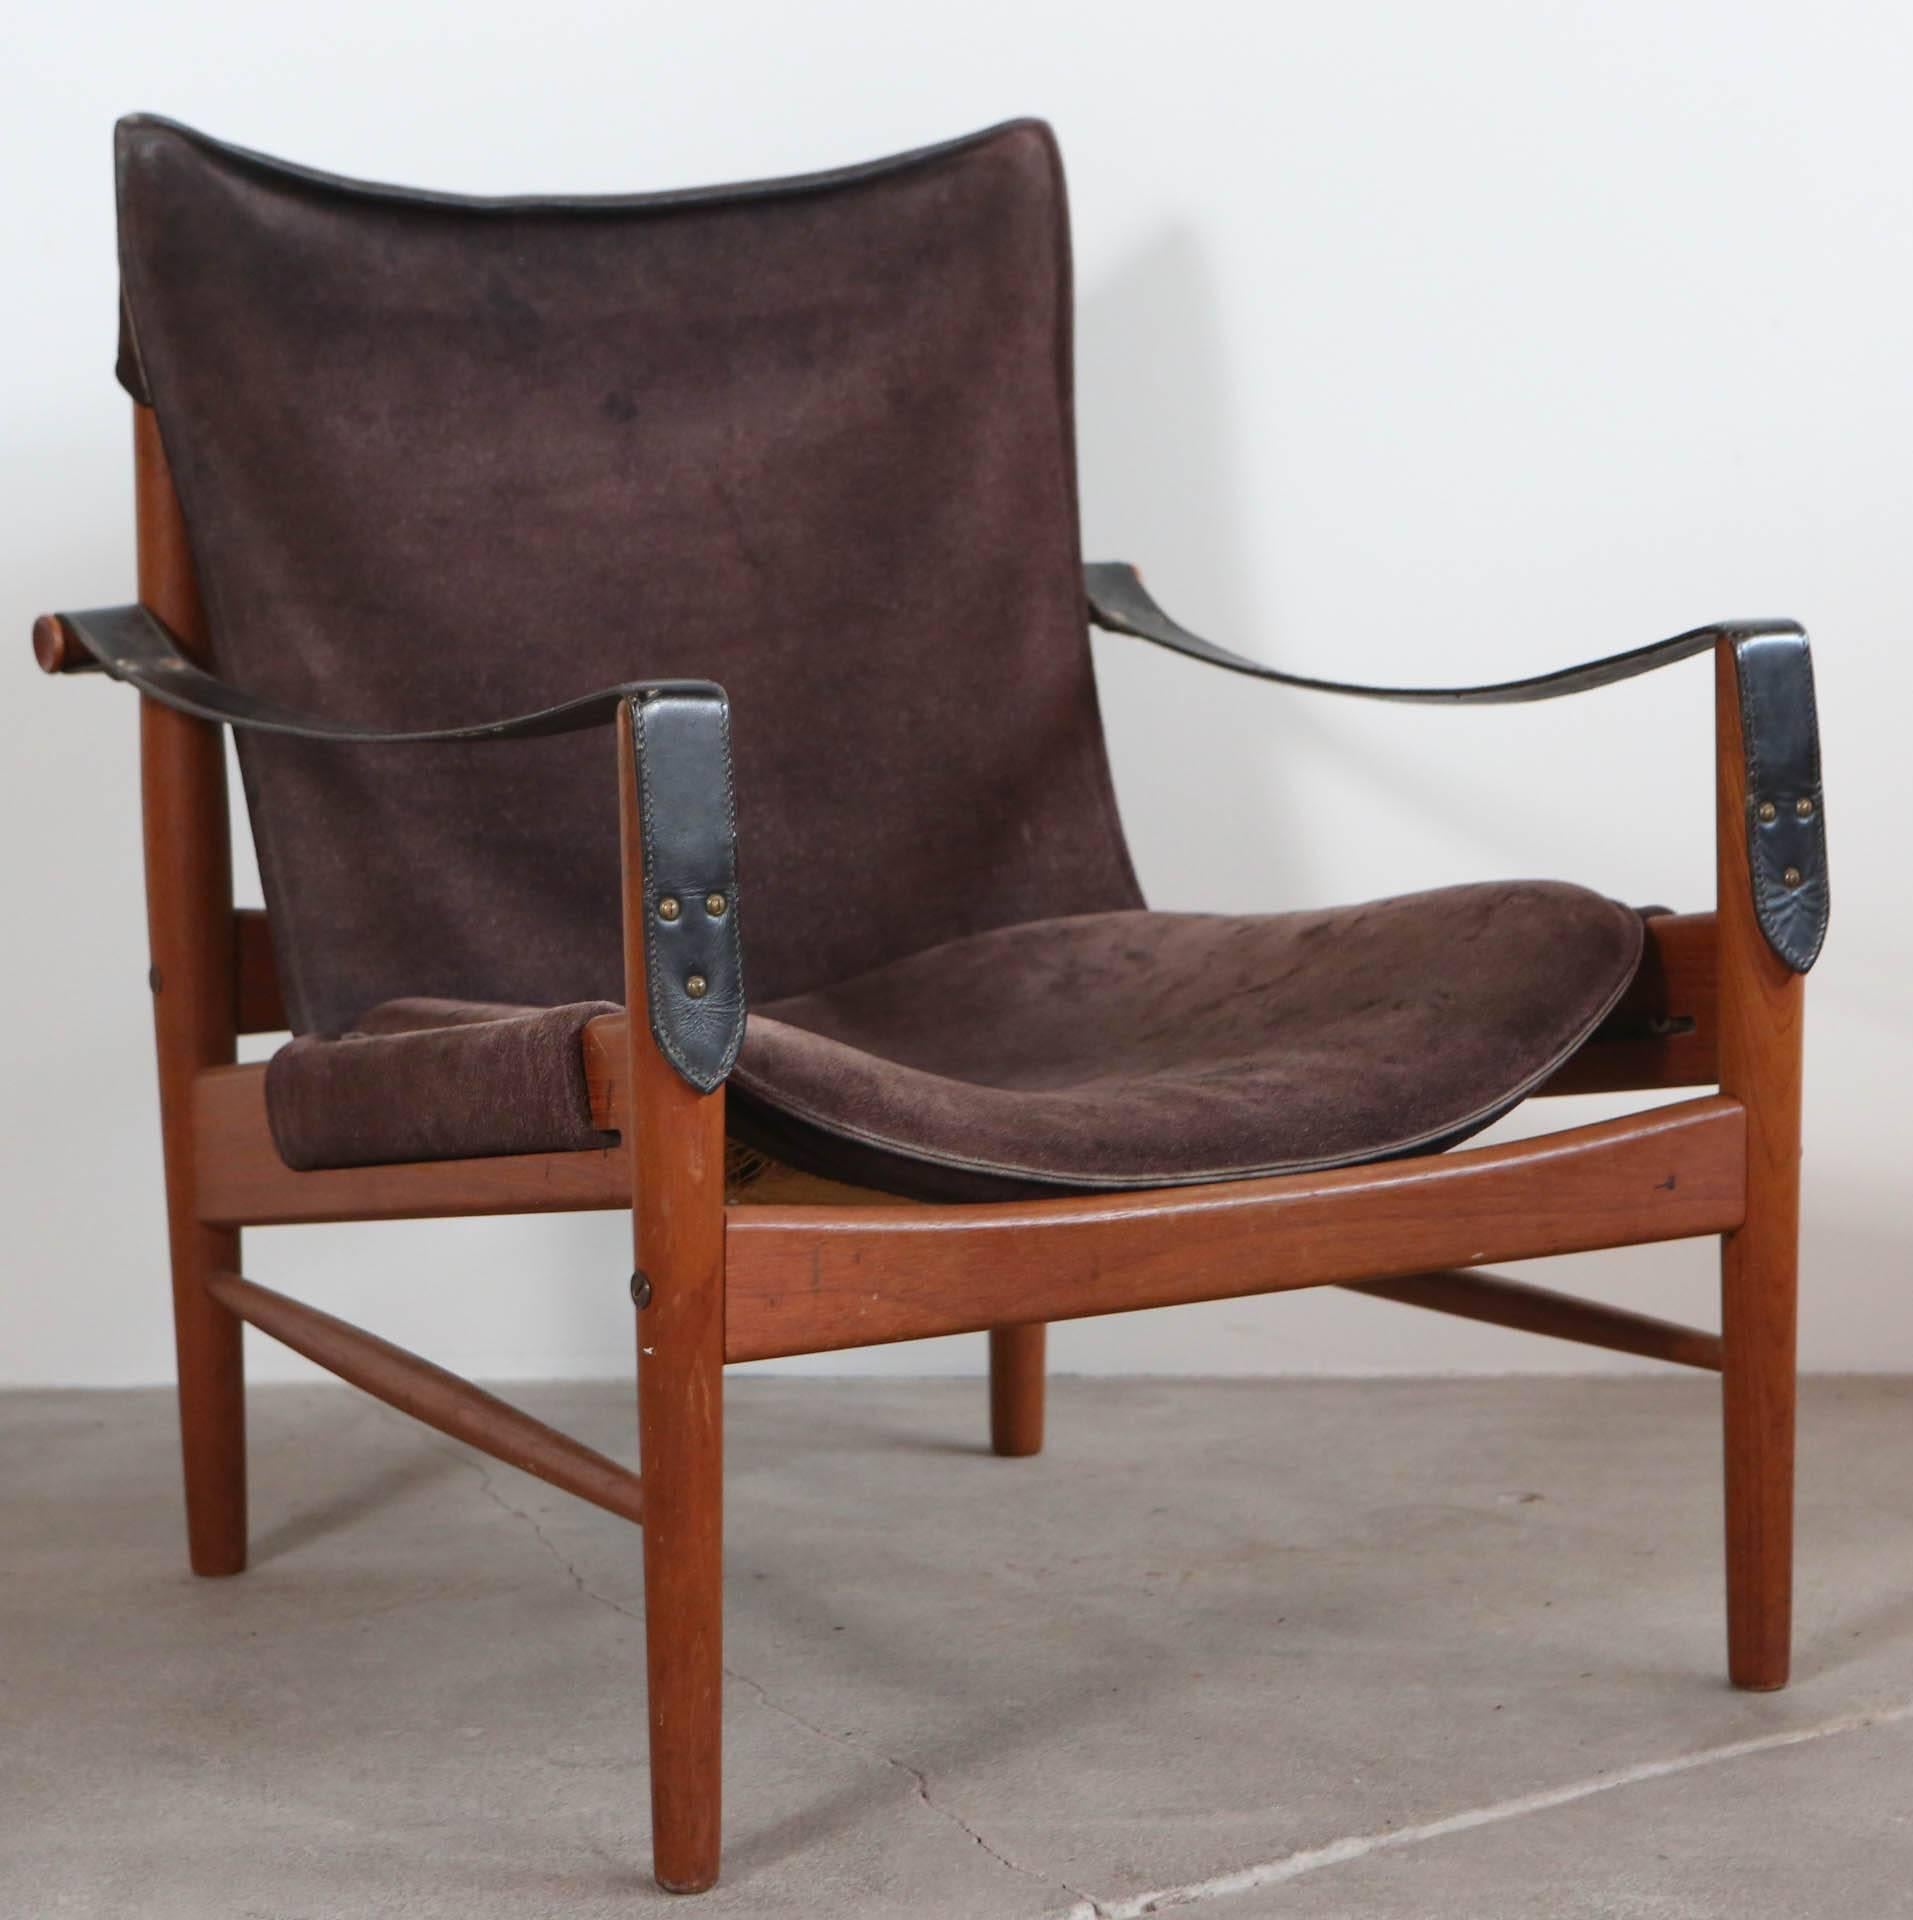 Pair of solid teak and suede Hans Olsen Safari chairs.